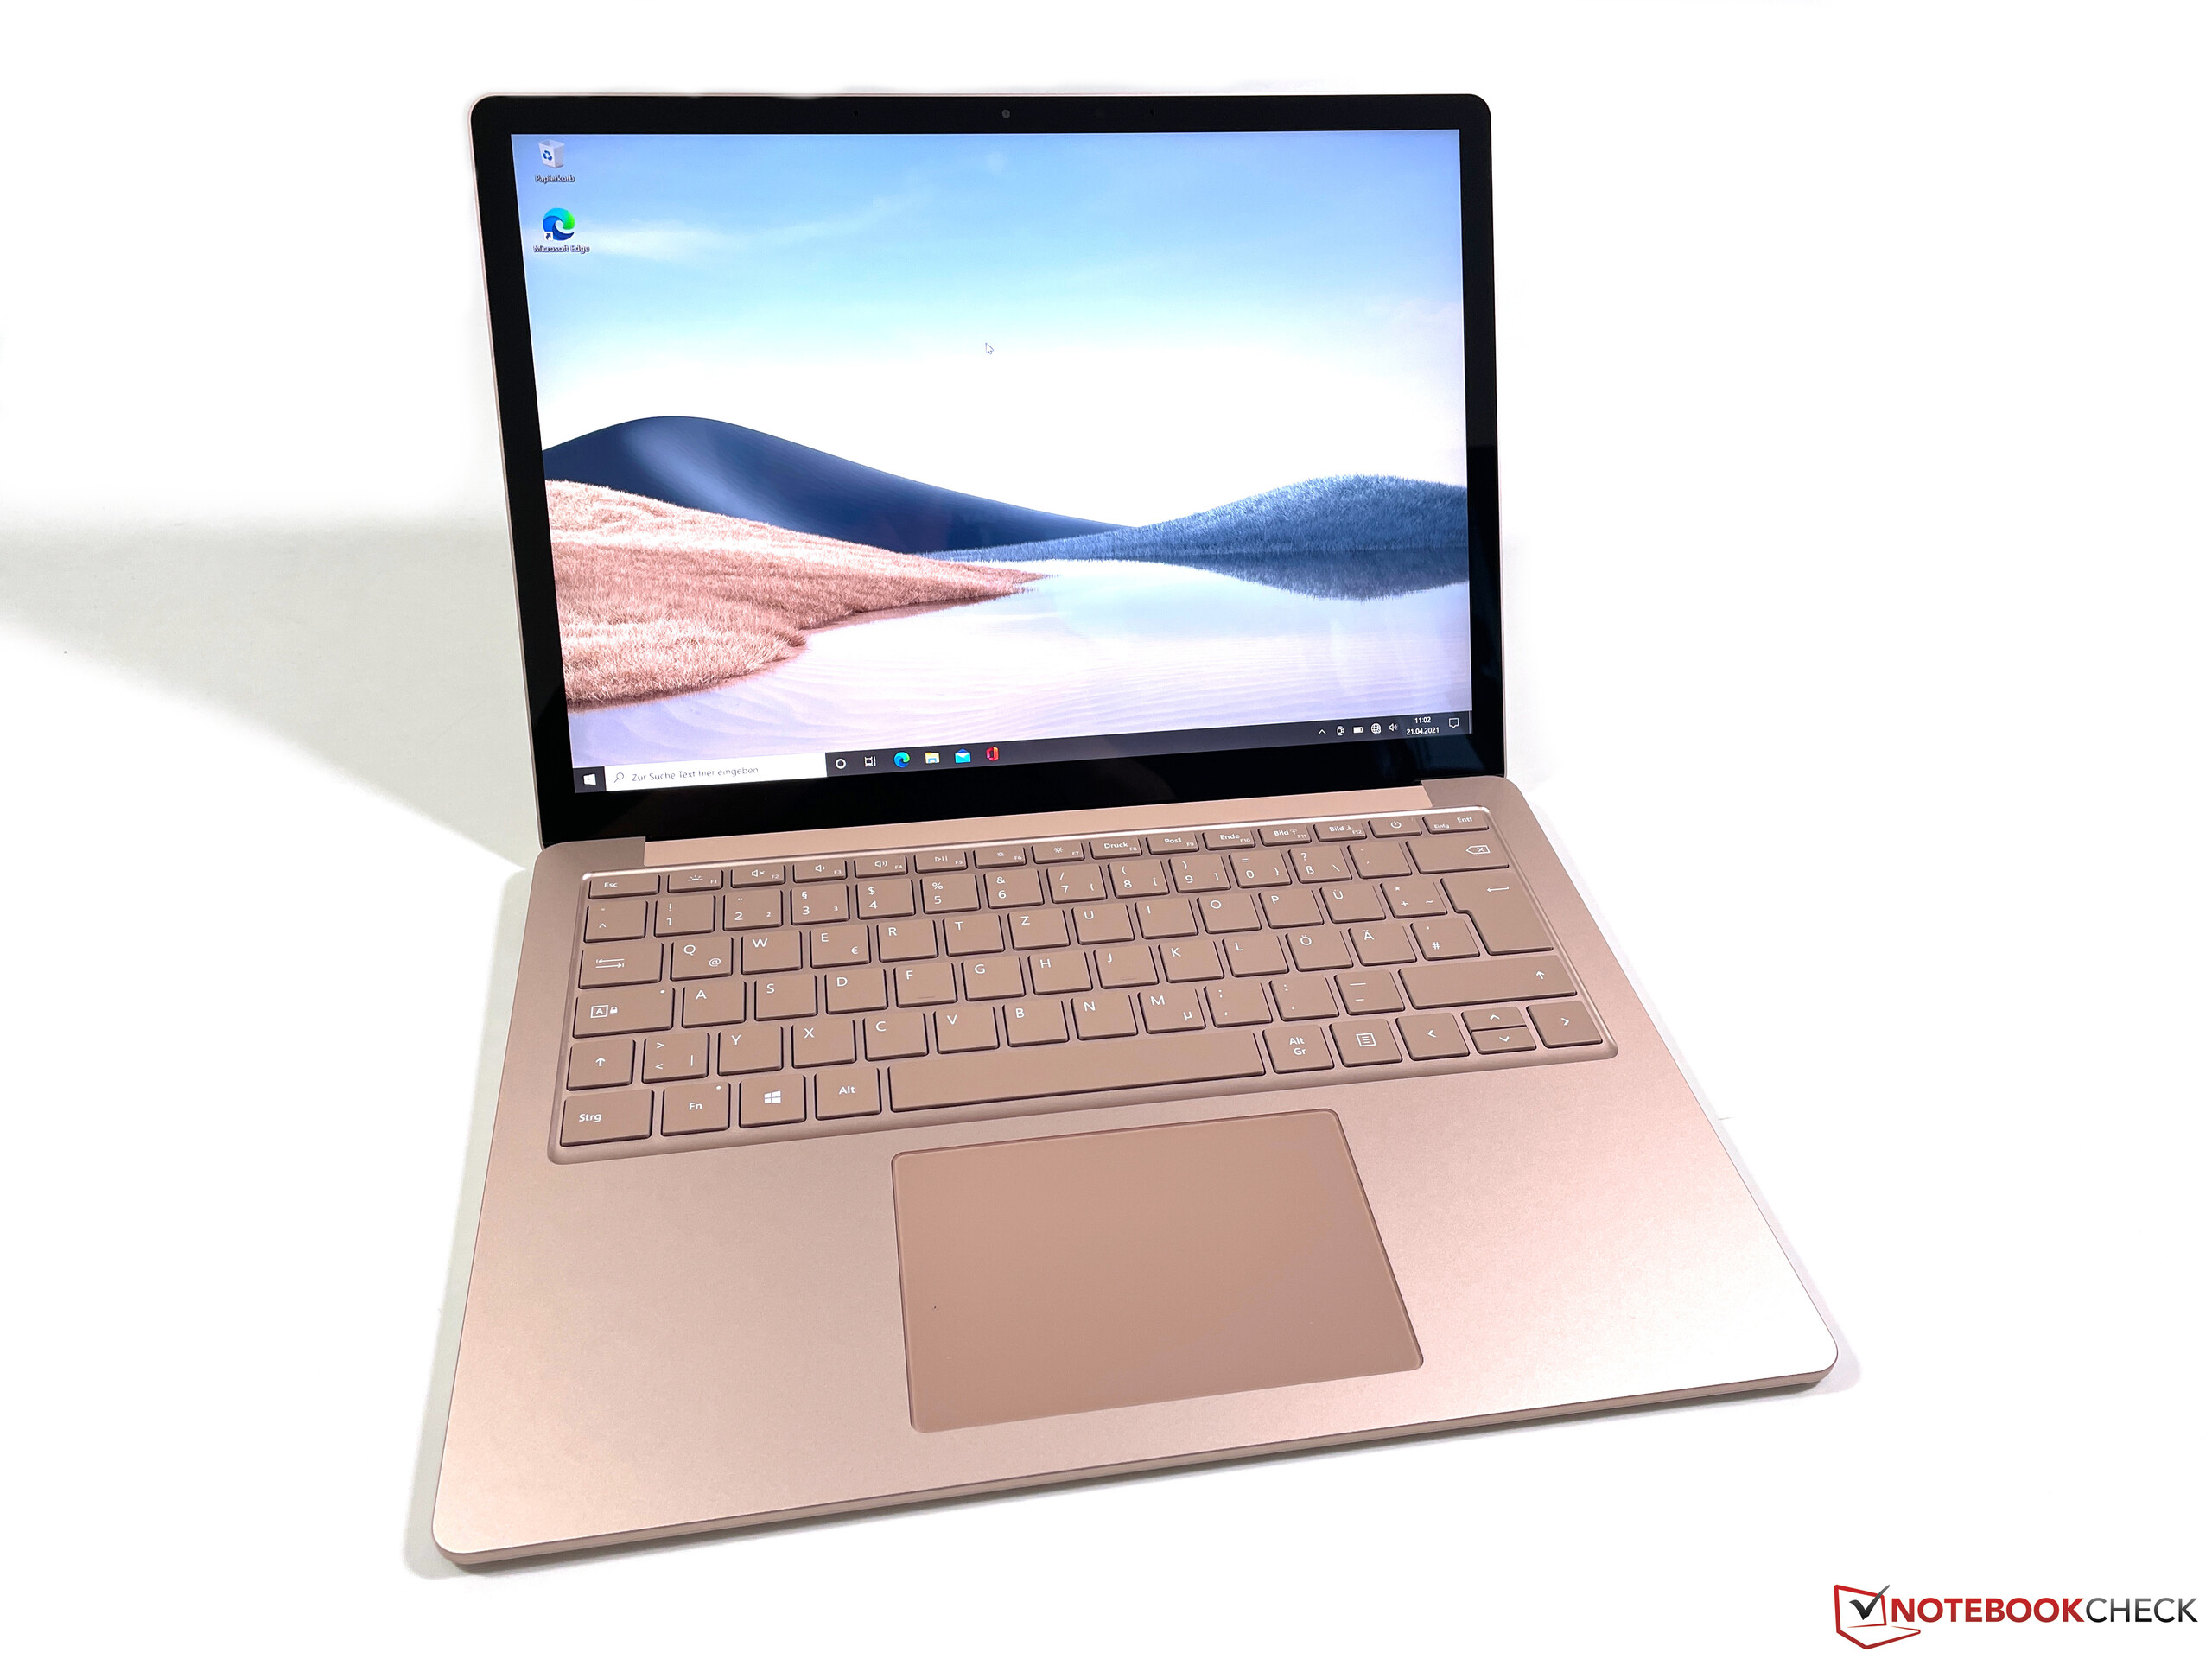 Microsoft Surface Laptop 4 (13-Inch) Review - SlashGear